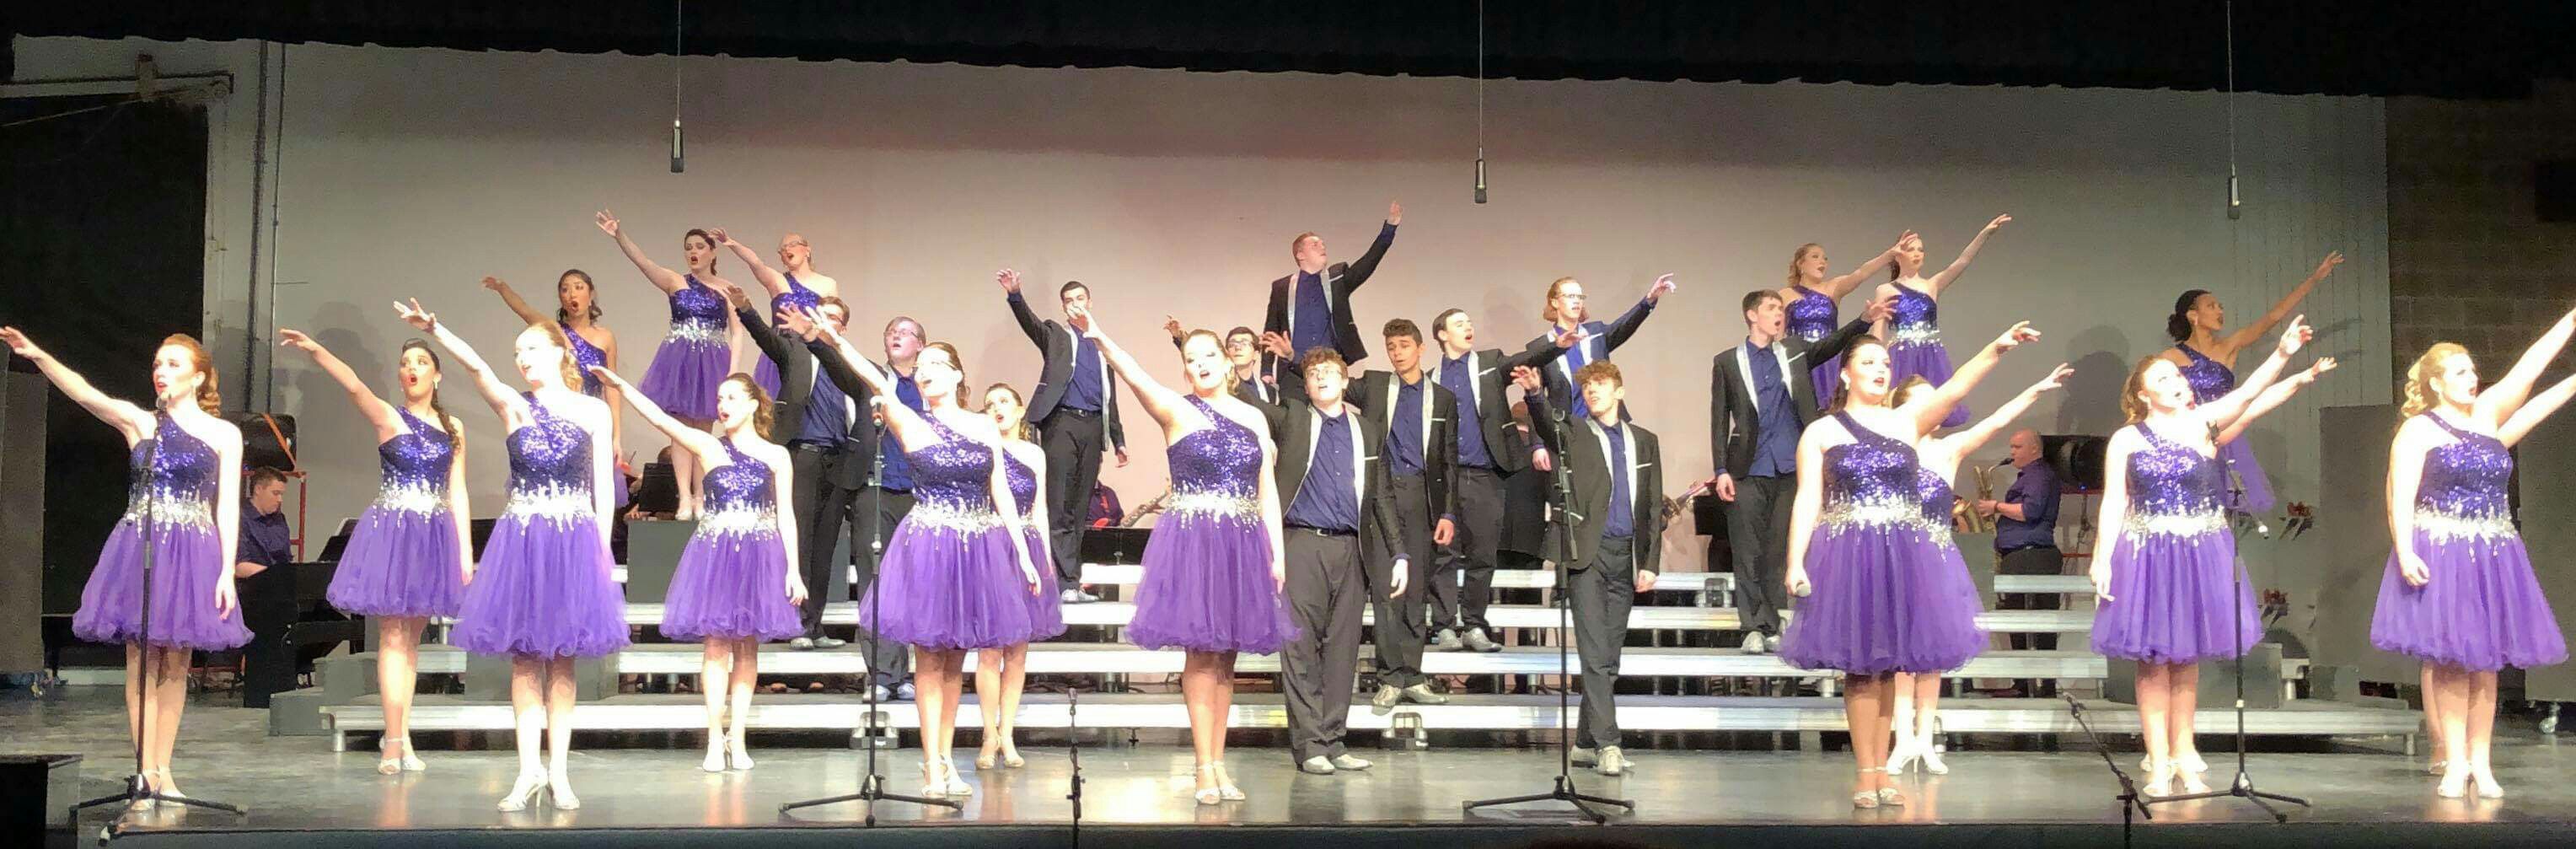 Purple show choir dress